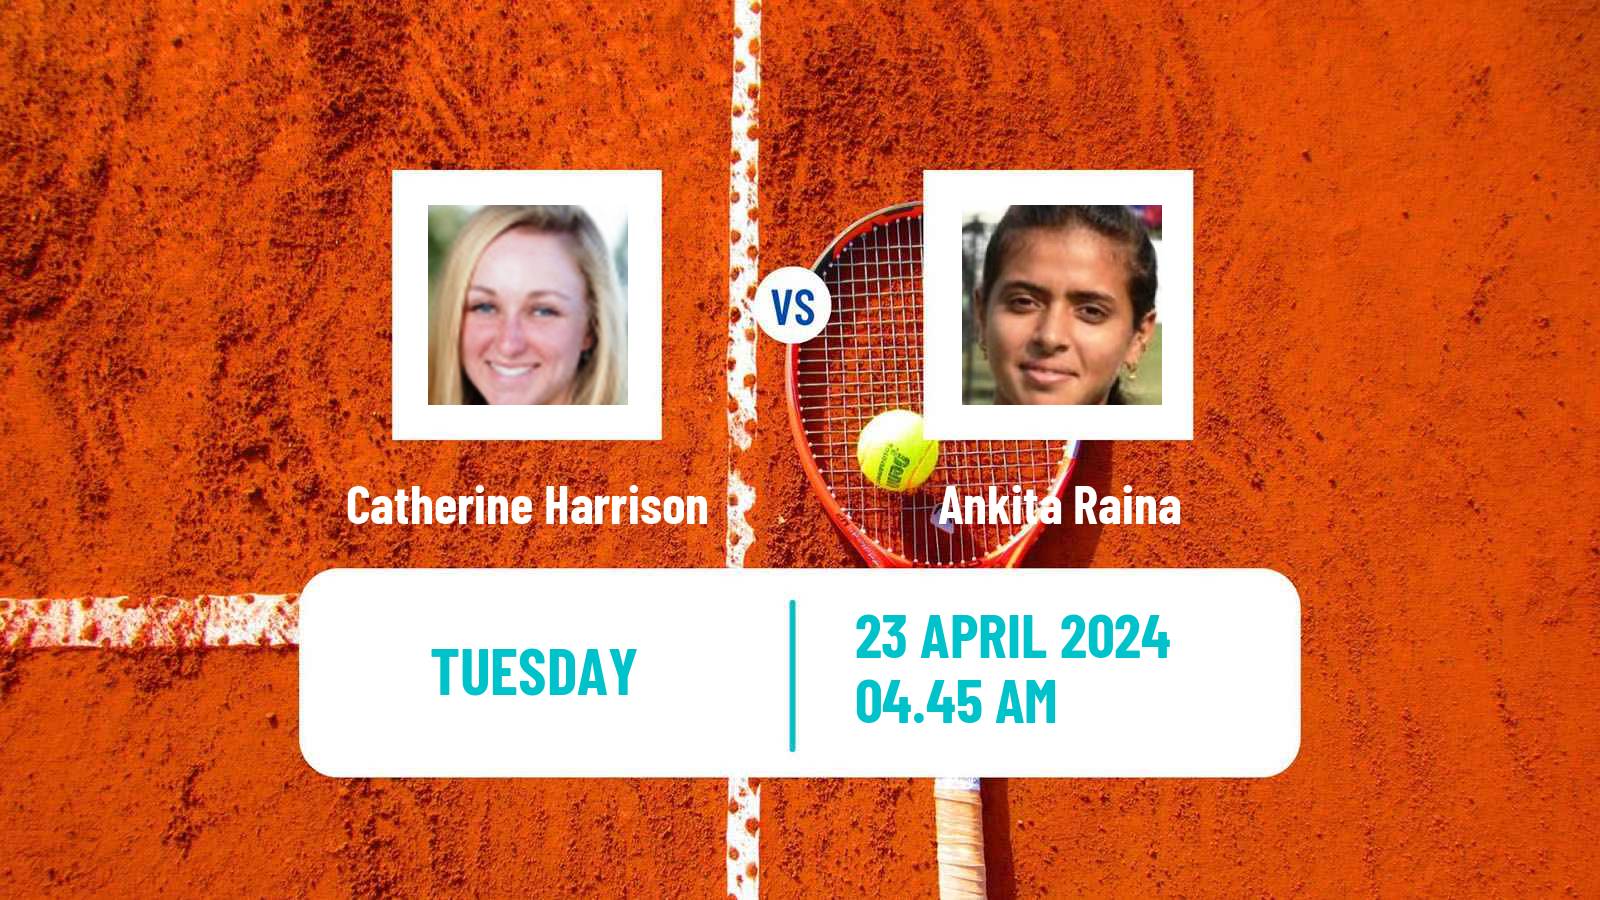 Tennis ITF W50 Lopota Women Catherine Harrison - Ankita Raina